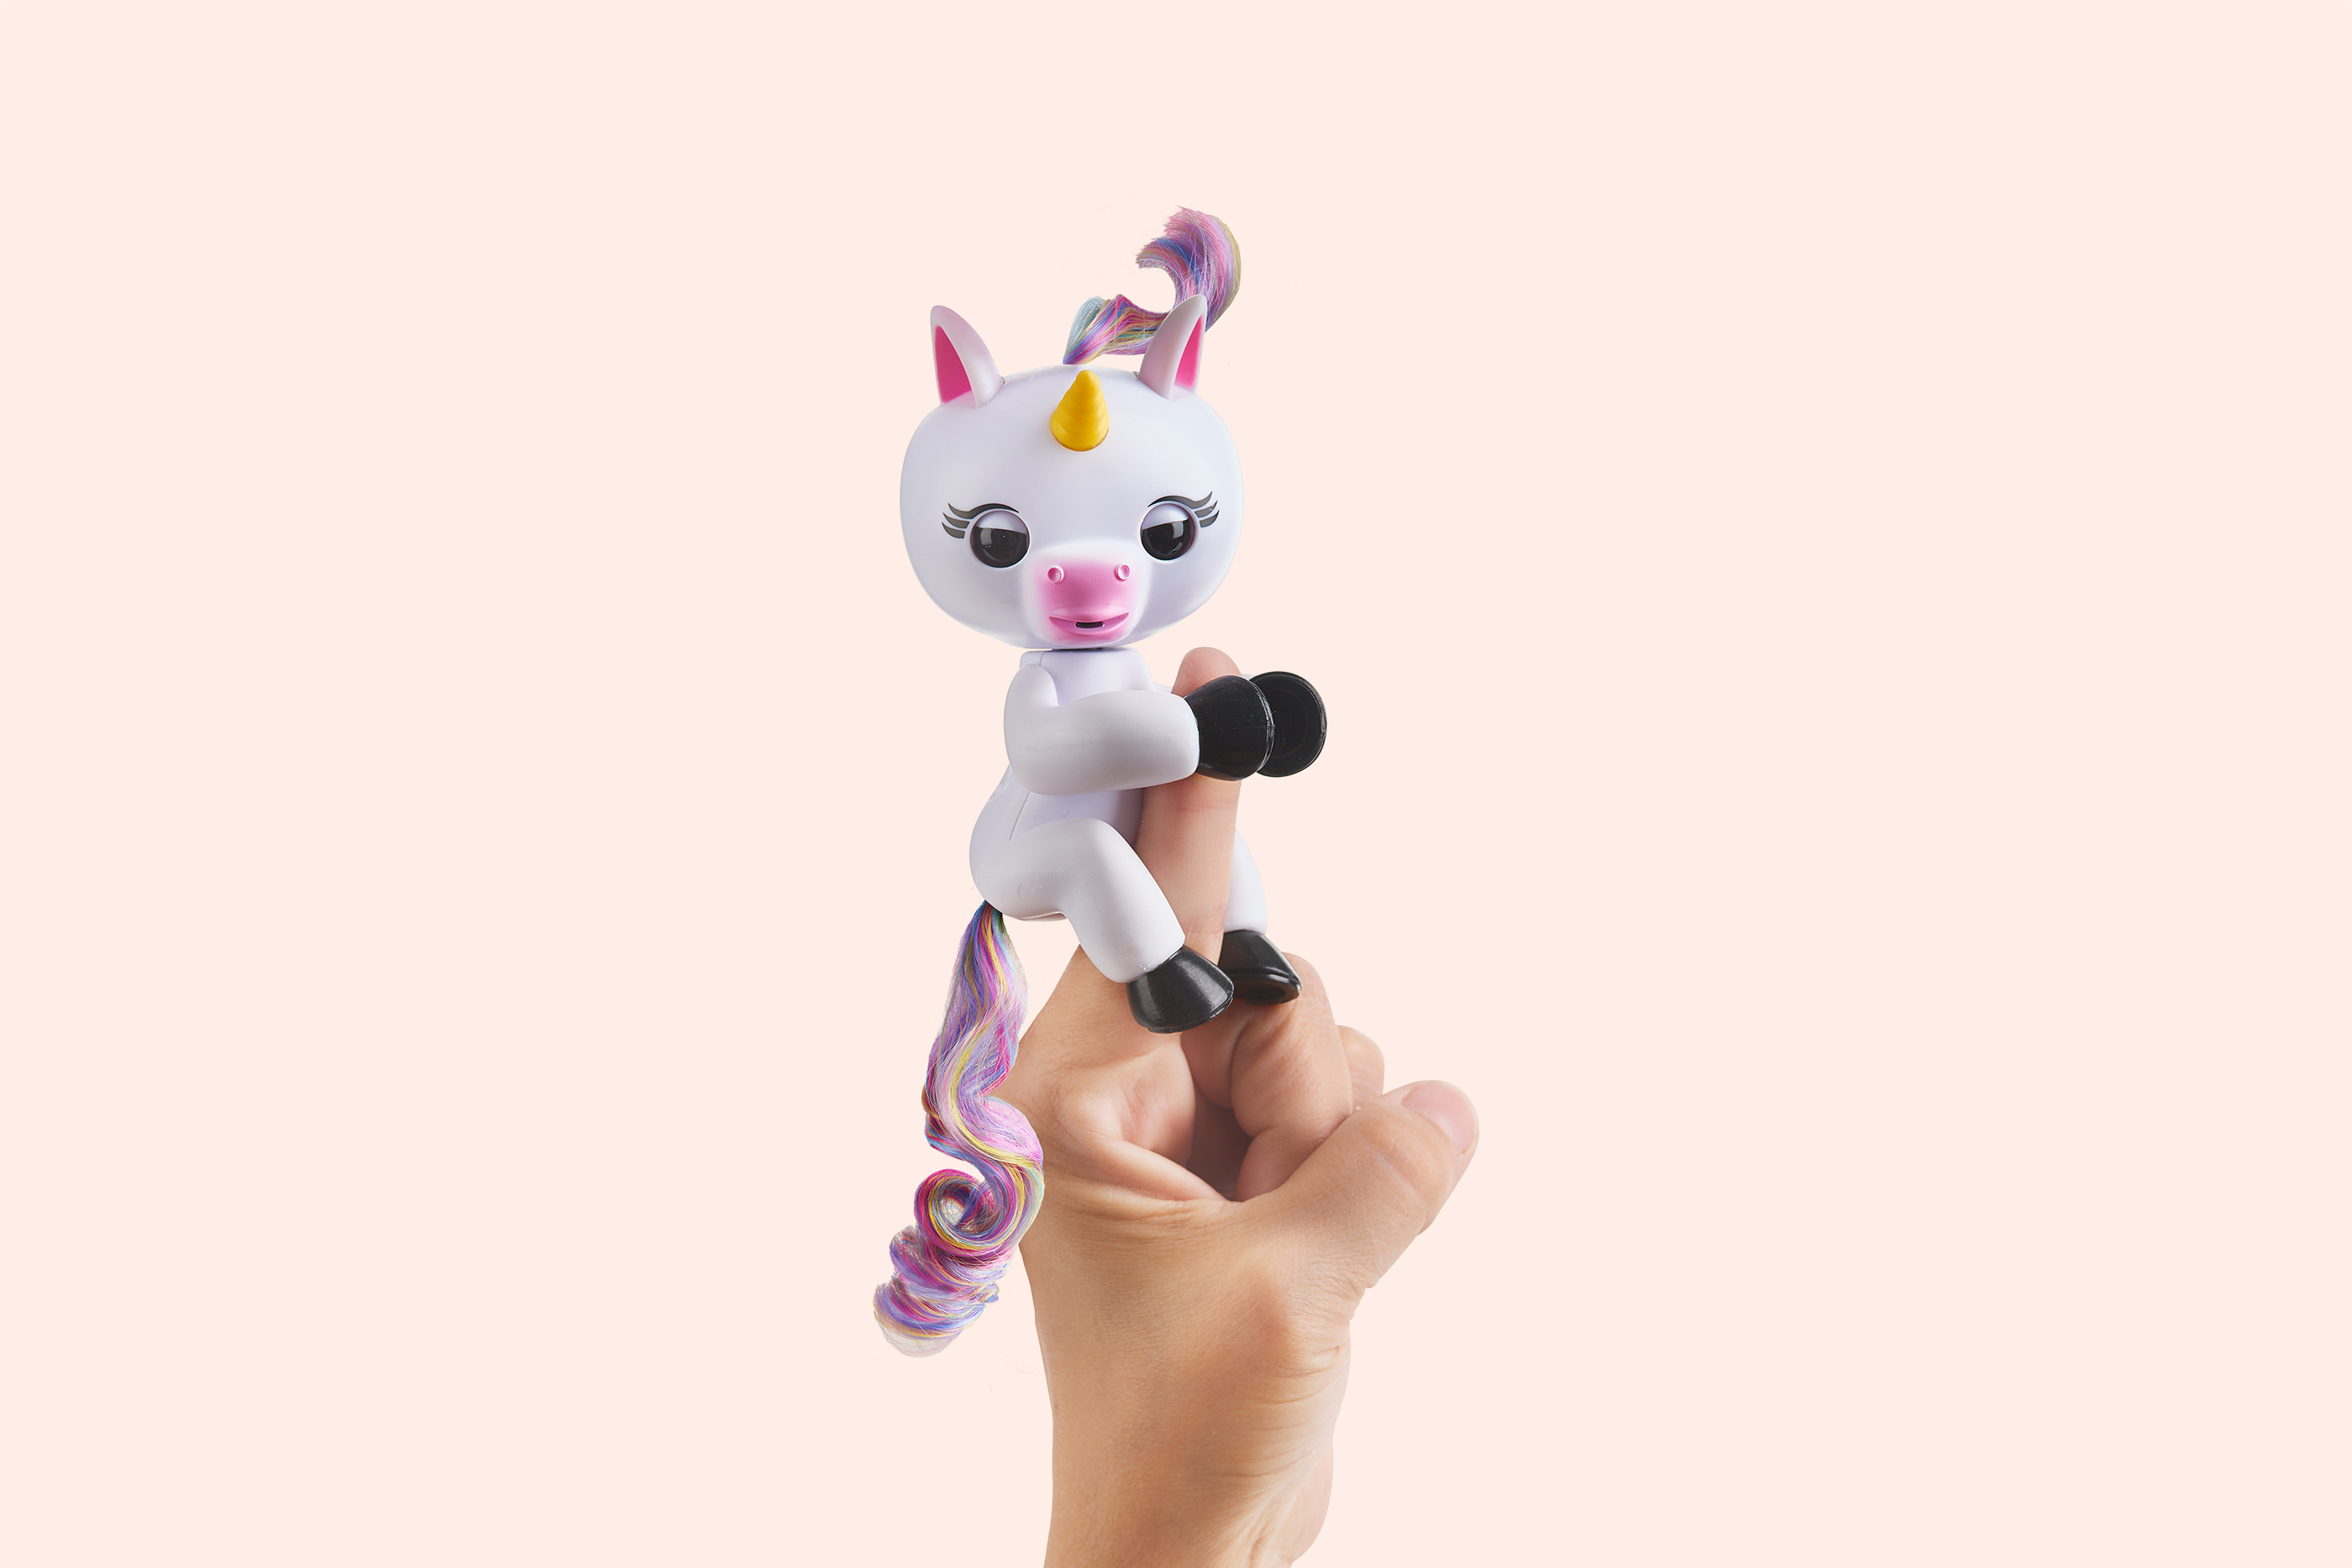 fingerlings plush unicorn